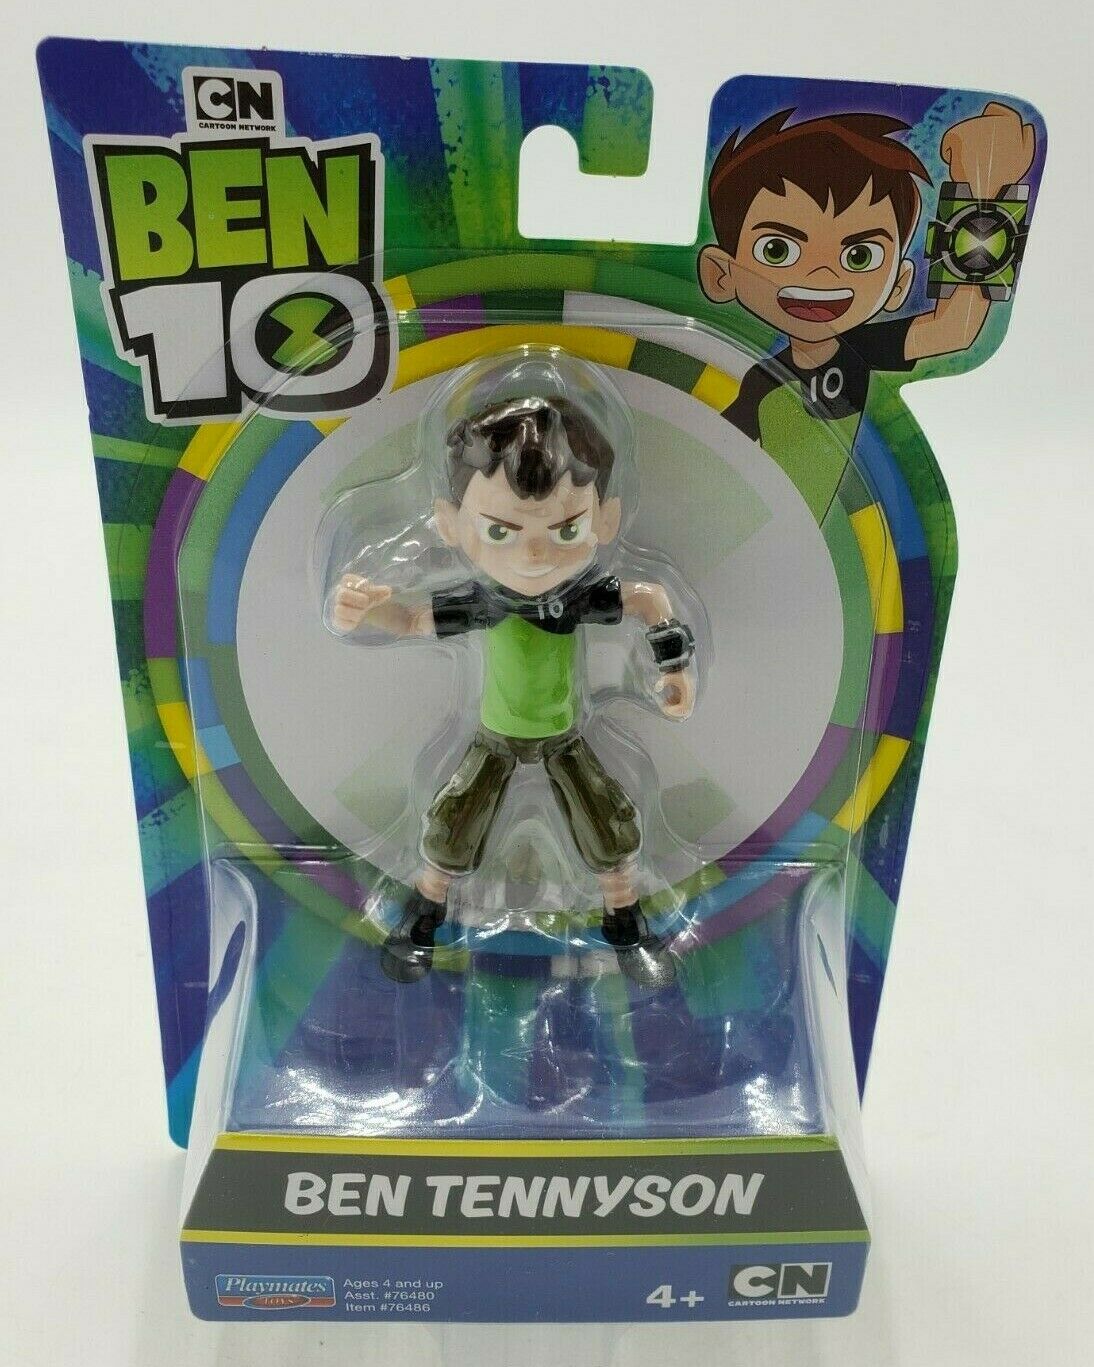 Ben 10 Ben Tennyson 4-Inch Action Figure - image 1 of 2